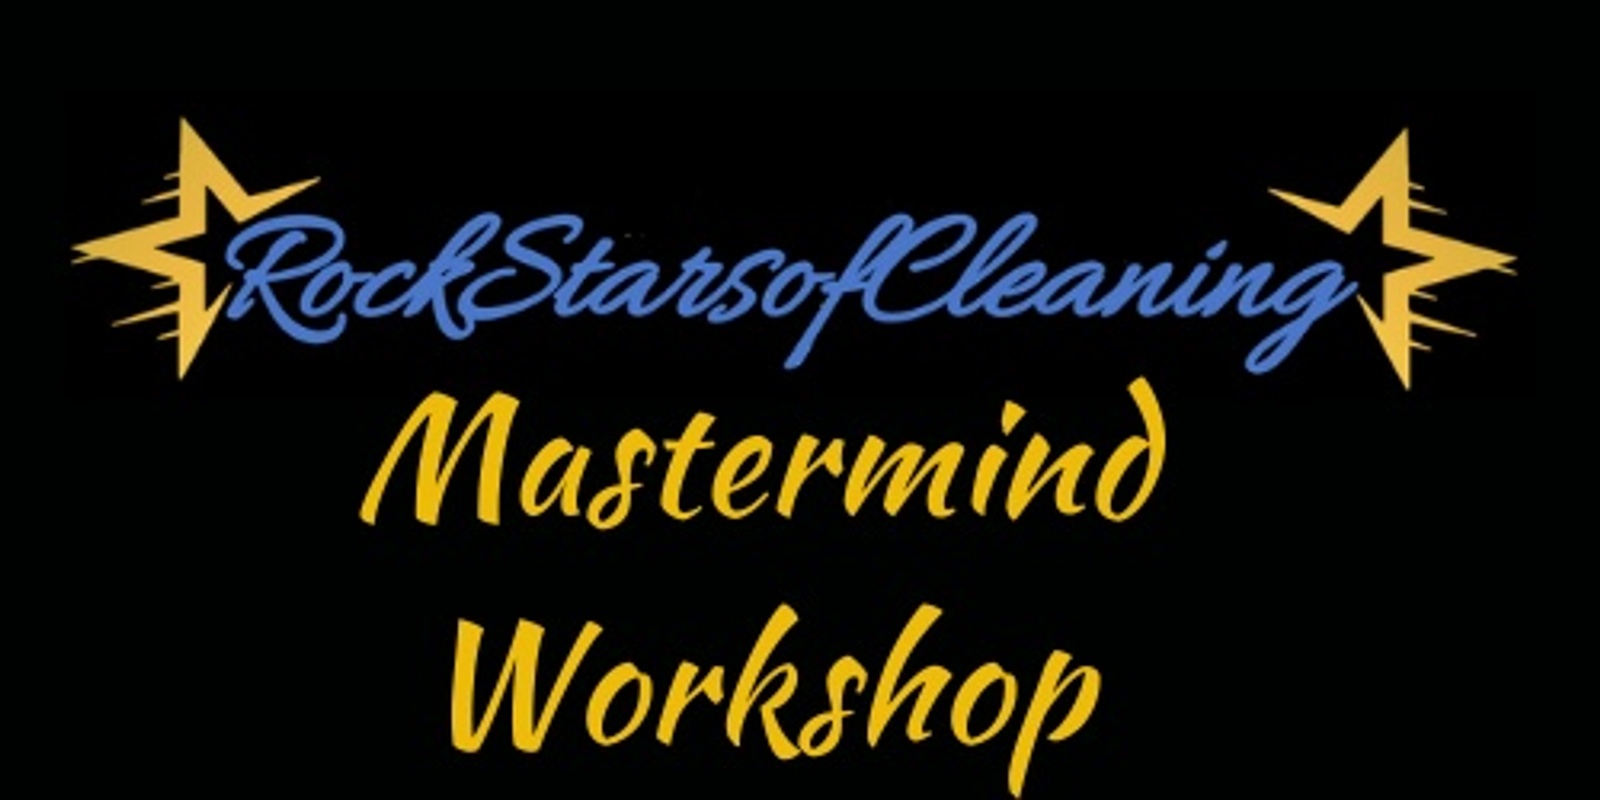 Banner image for Rock Stars of Cleaning Mastermind Workshop 